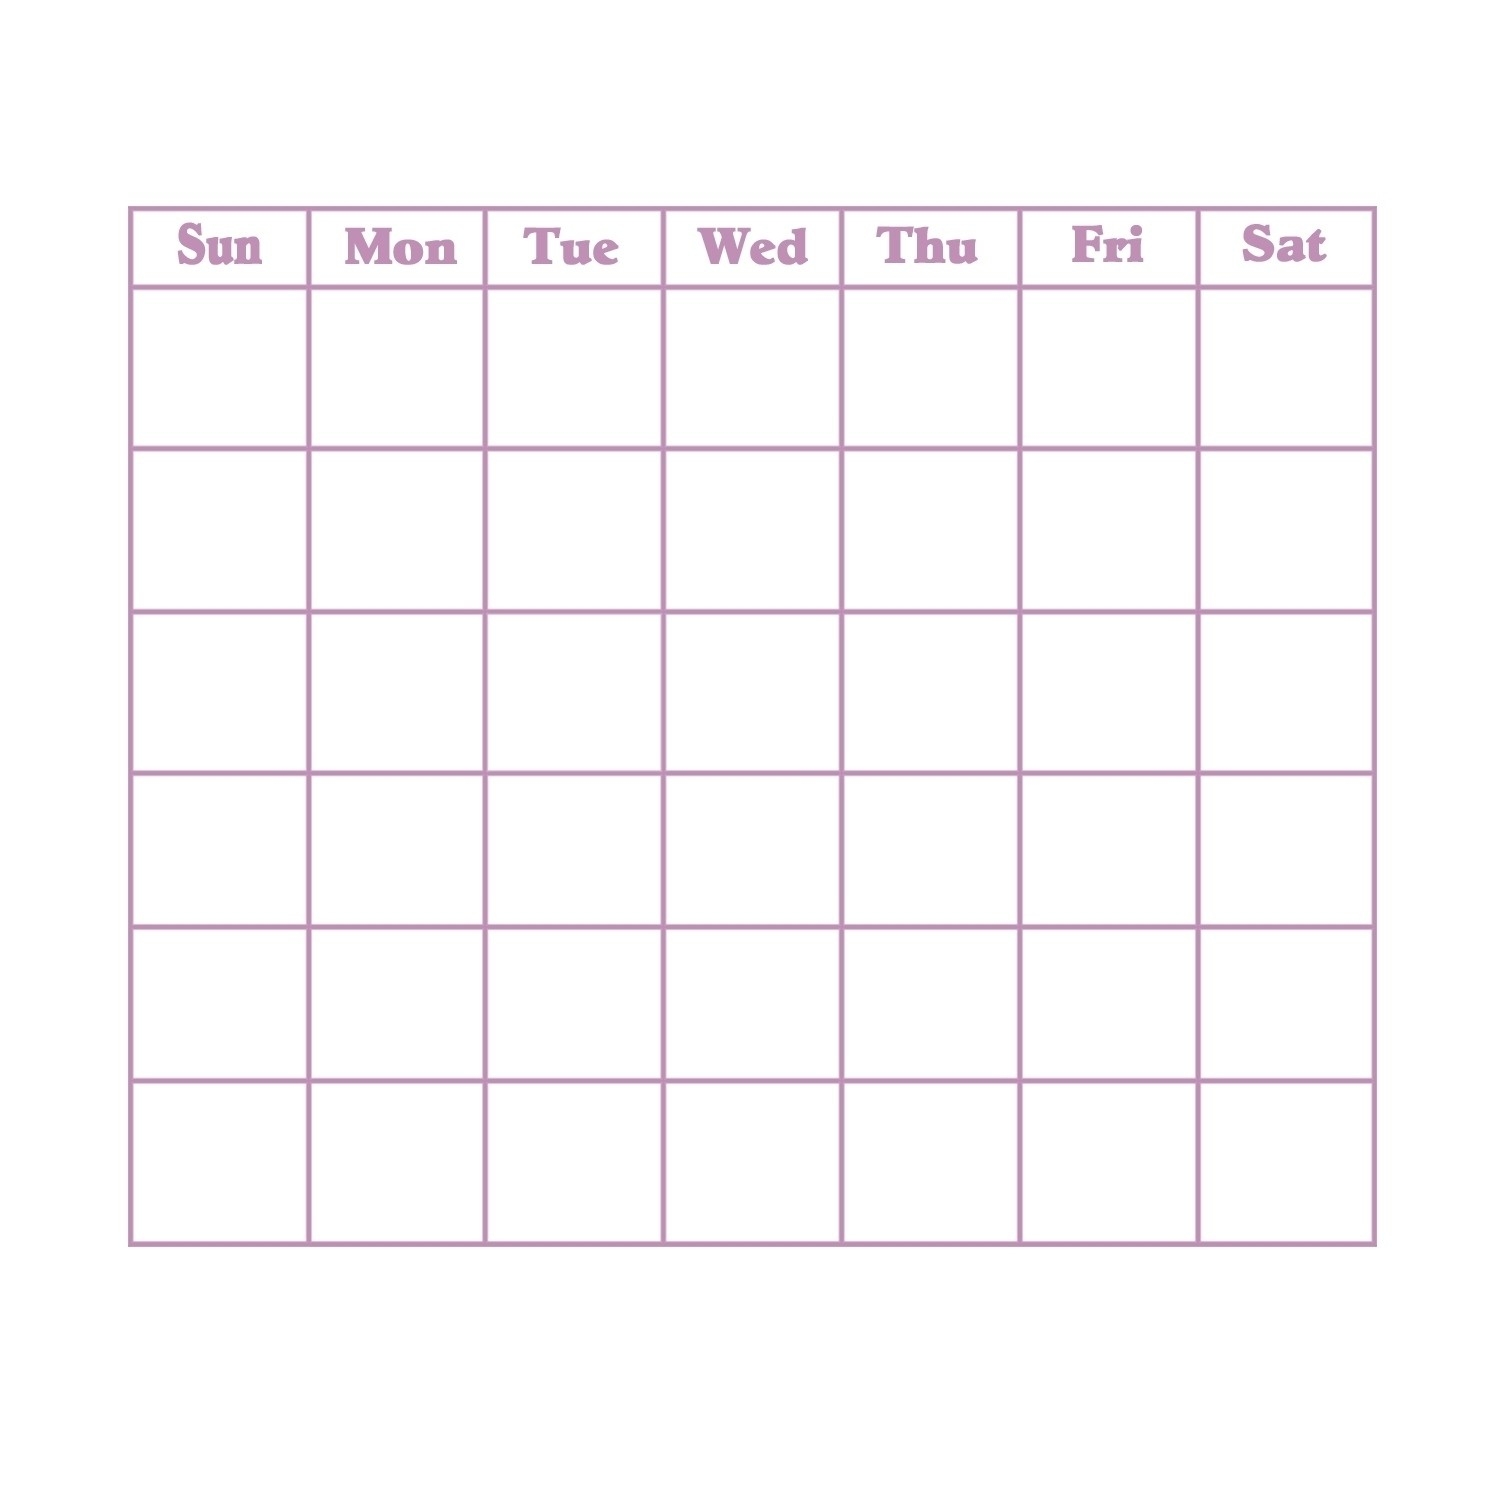 Remarkable Blank Calendar 31 Days • Printable Blank Calendar-Blank Calender 31 Days